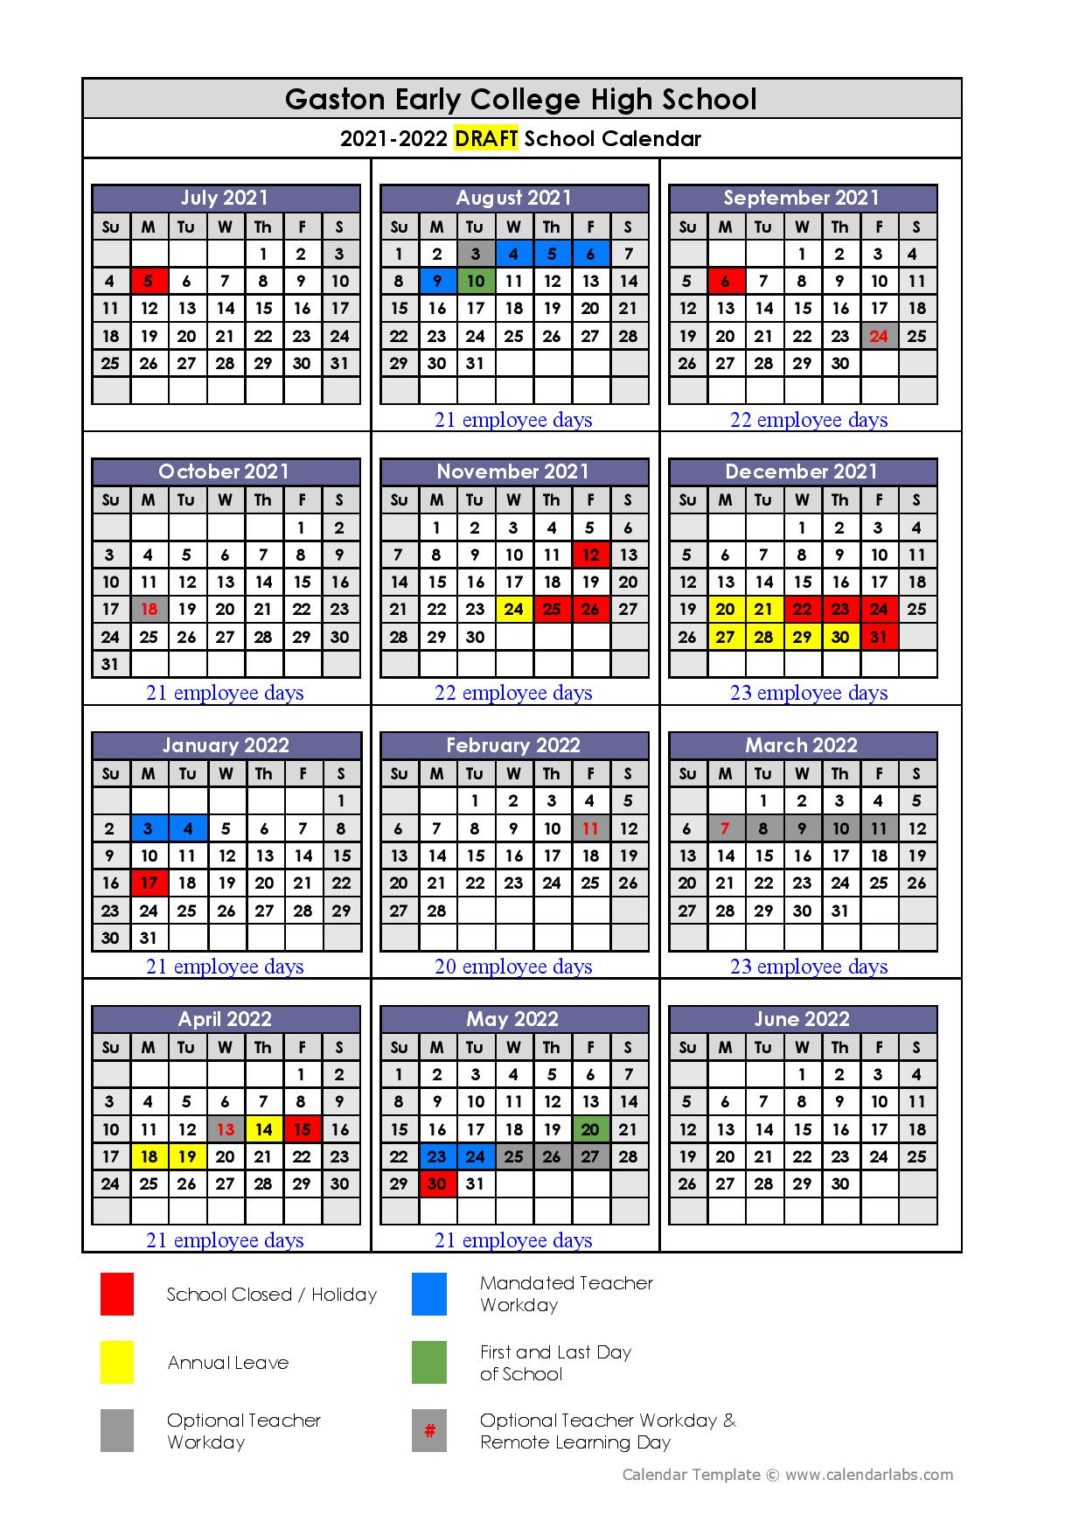 Gaston County Schools Calendar 20212022 in PDF